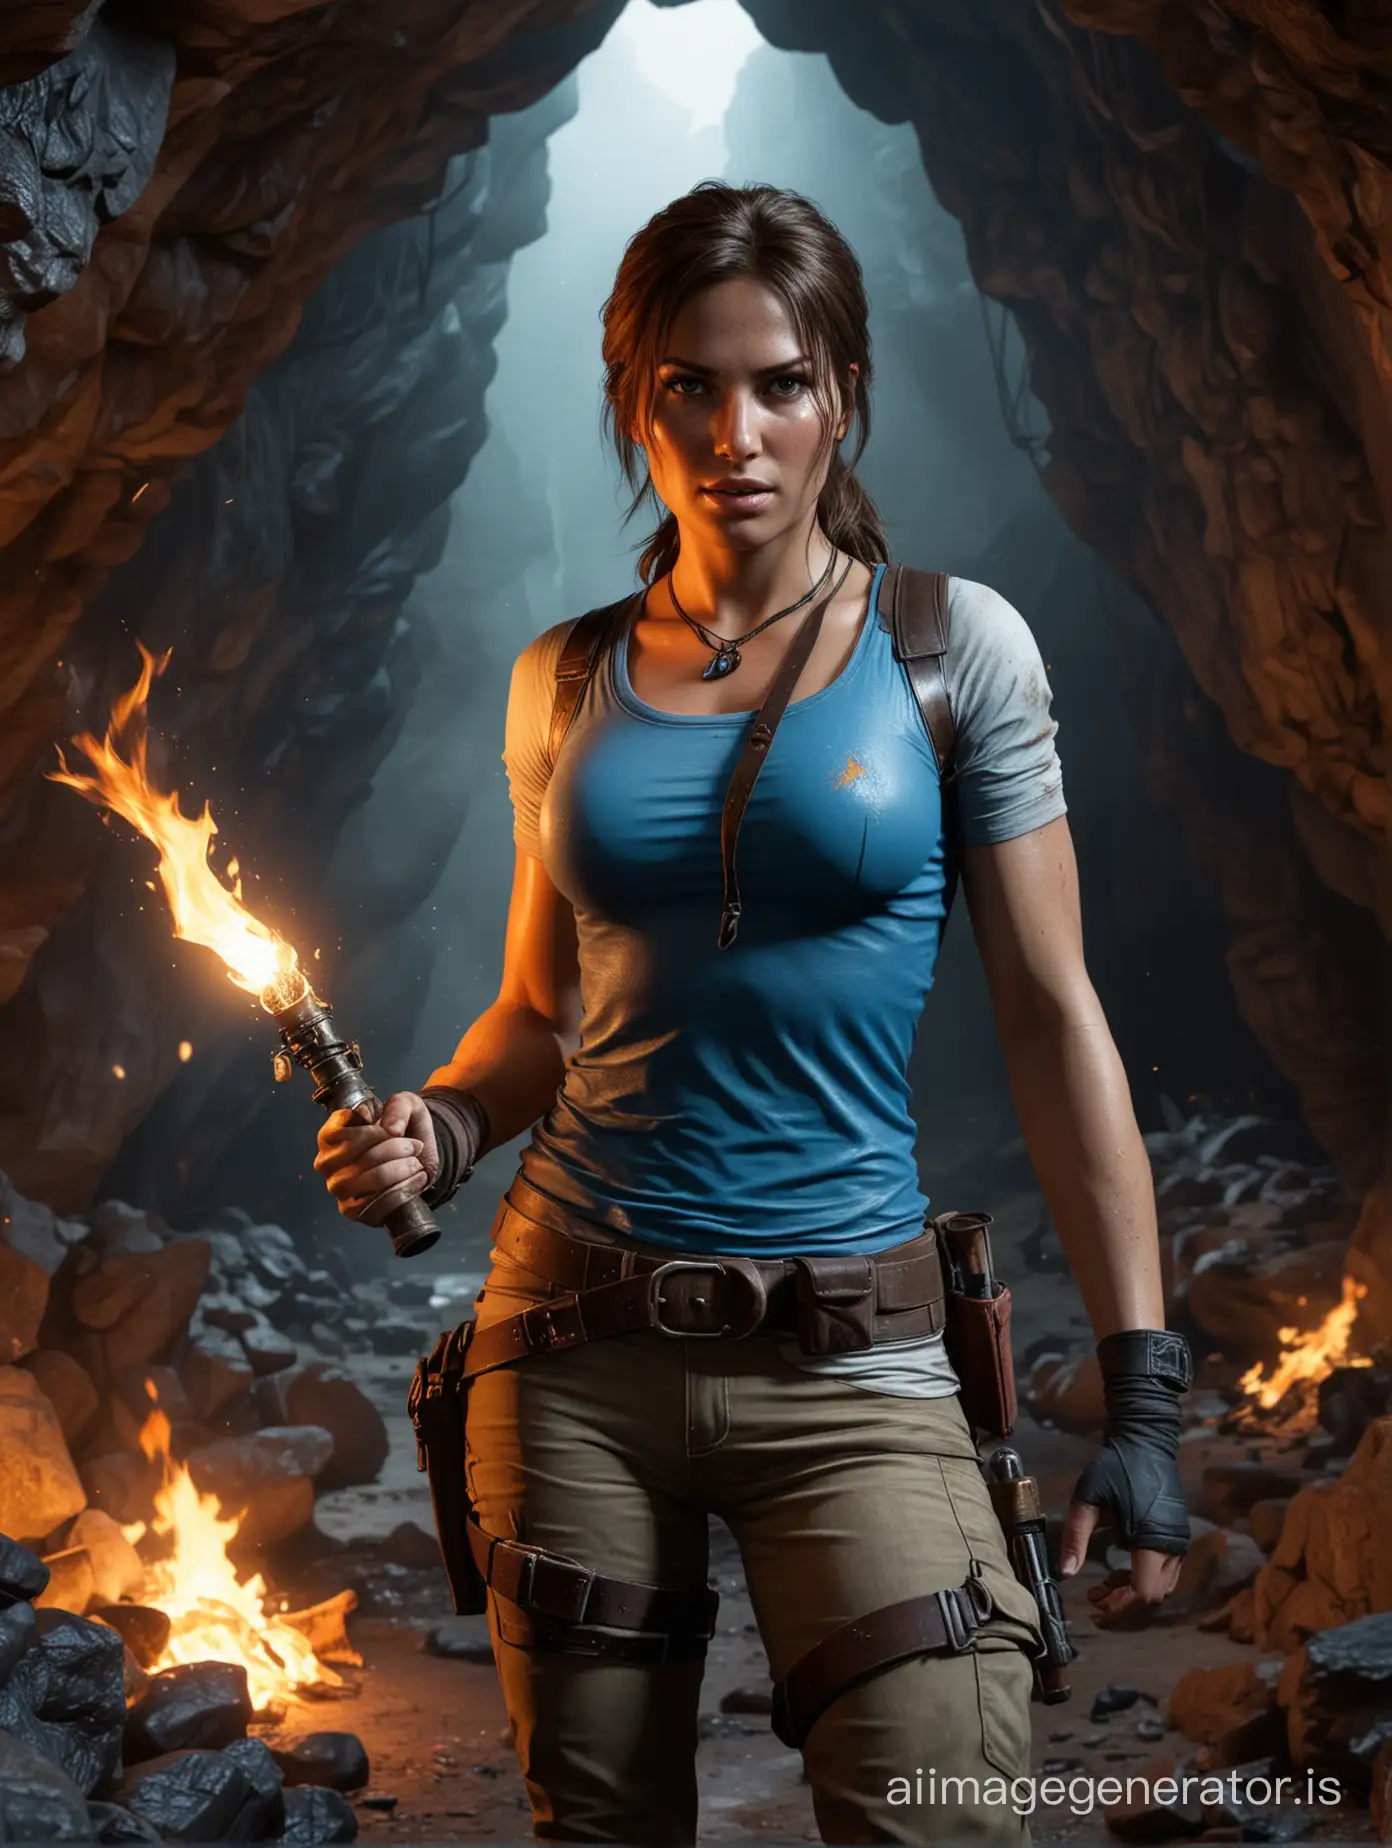 Adventurous-Lara-Croft-Explores-Ancient-Cave-with-Flaming-Torch